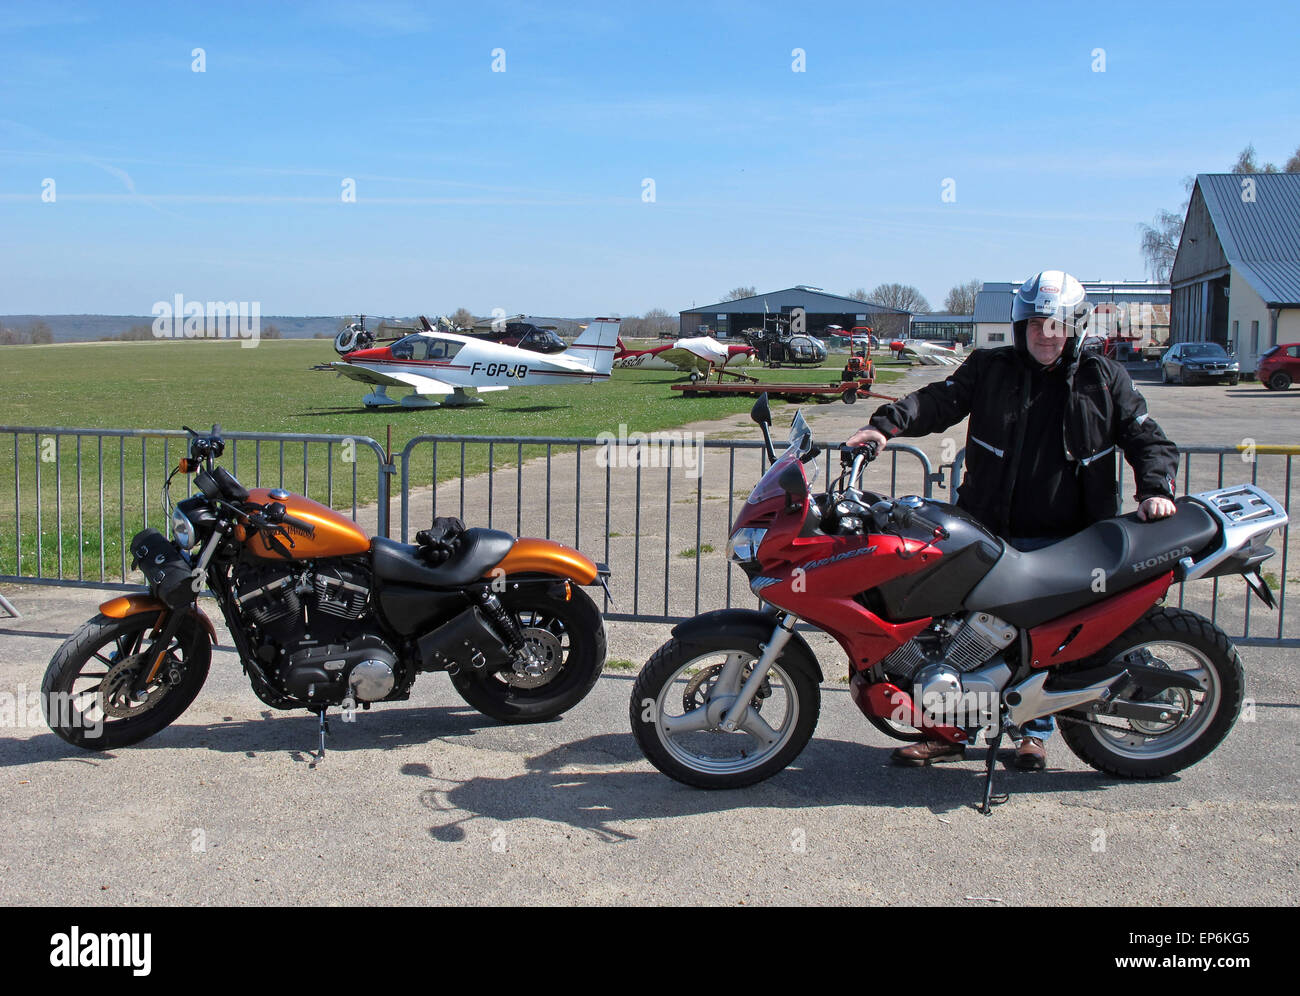 Honda Varadero 125 and Harley-Davidson 883,Jean Salis  Aerodrome,Cerny,Essonne,France Stock Photo - Alamy